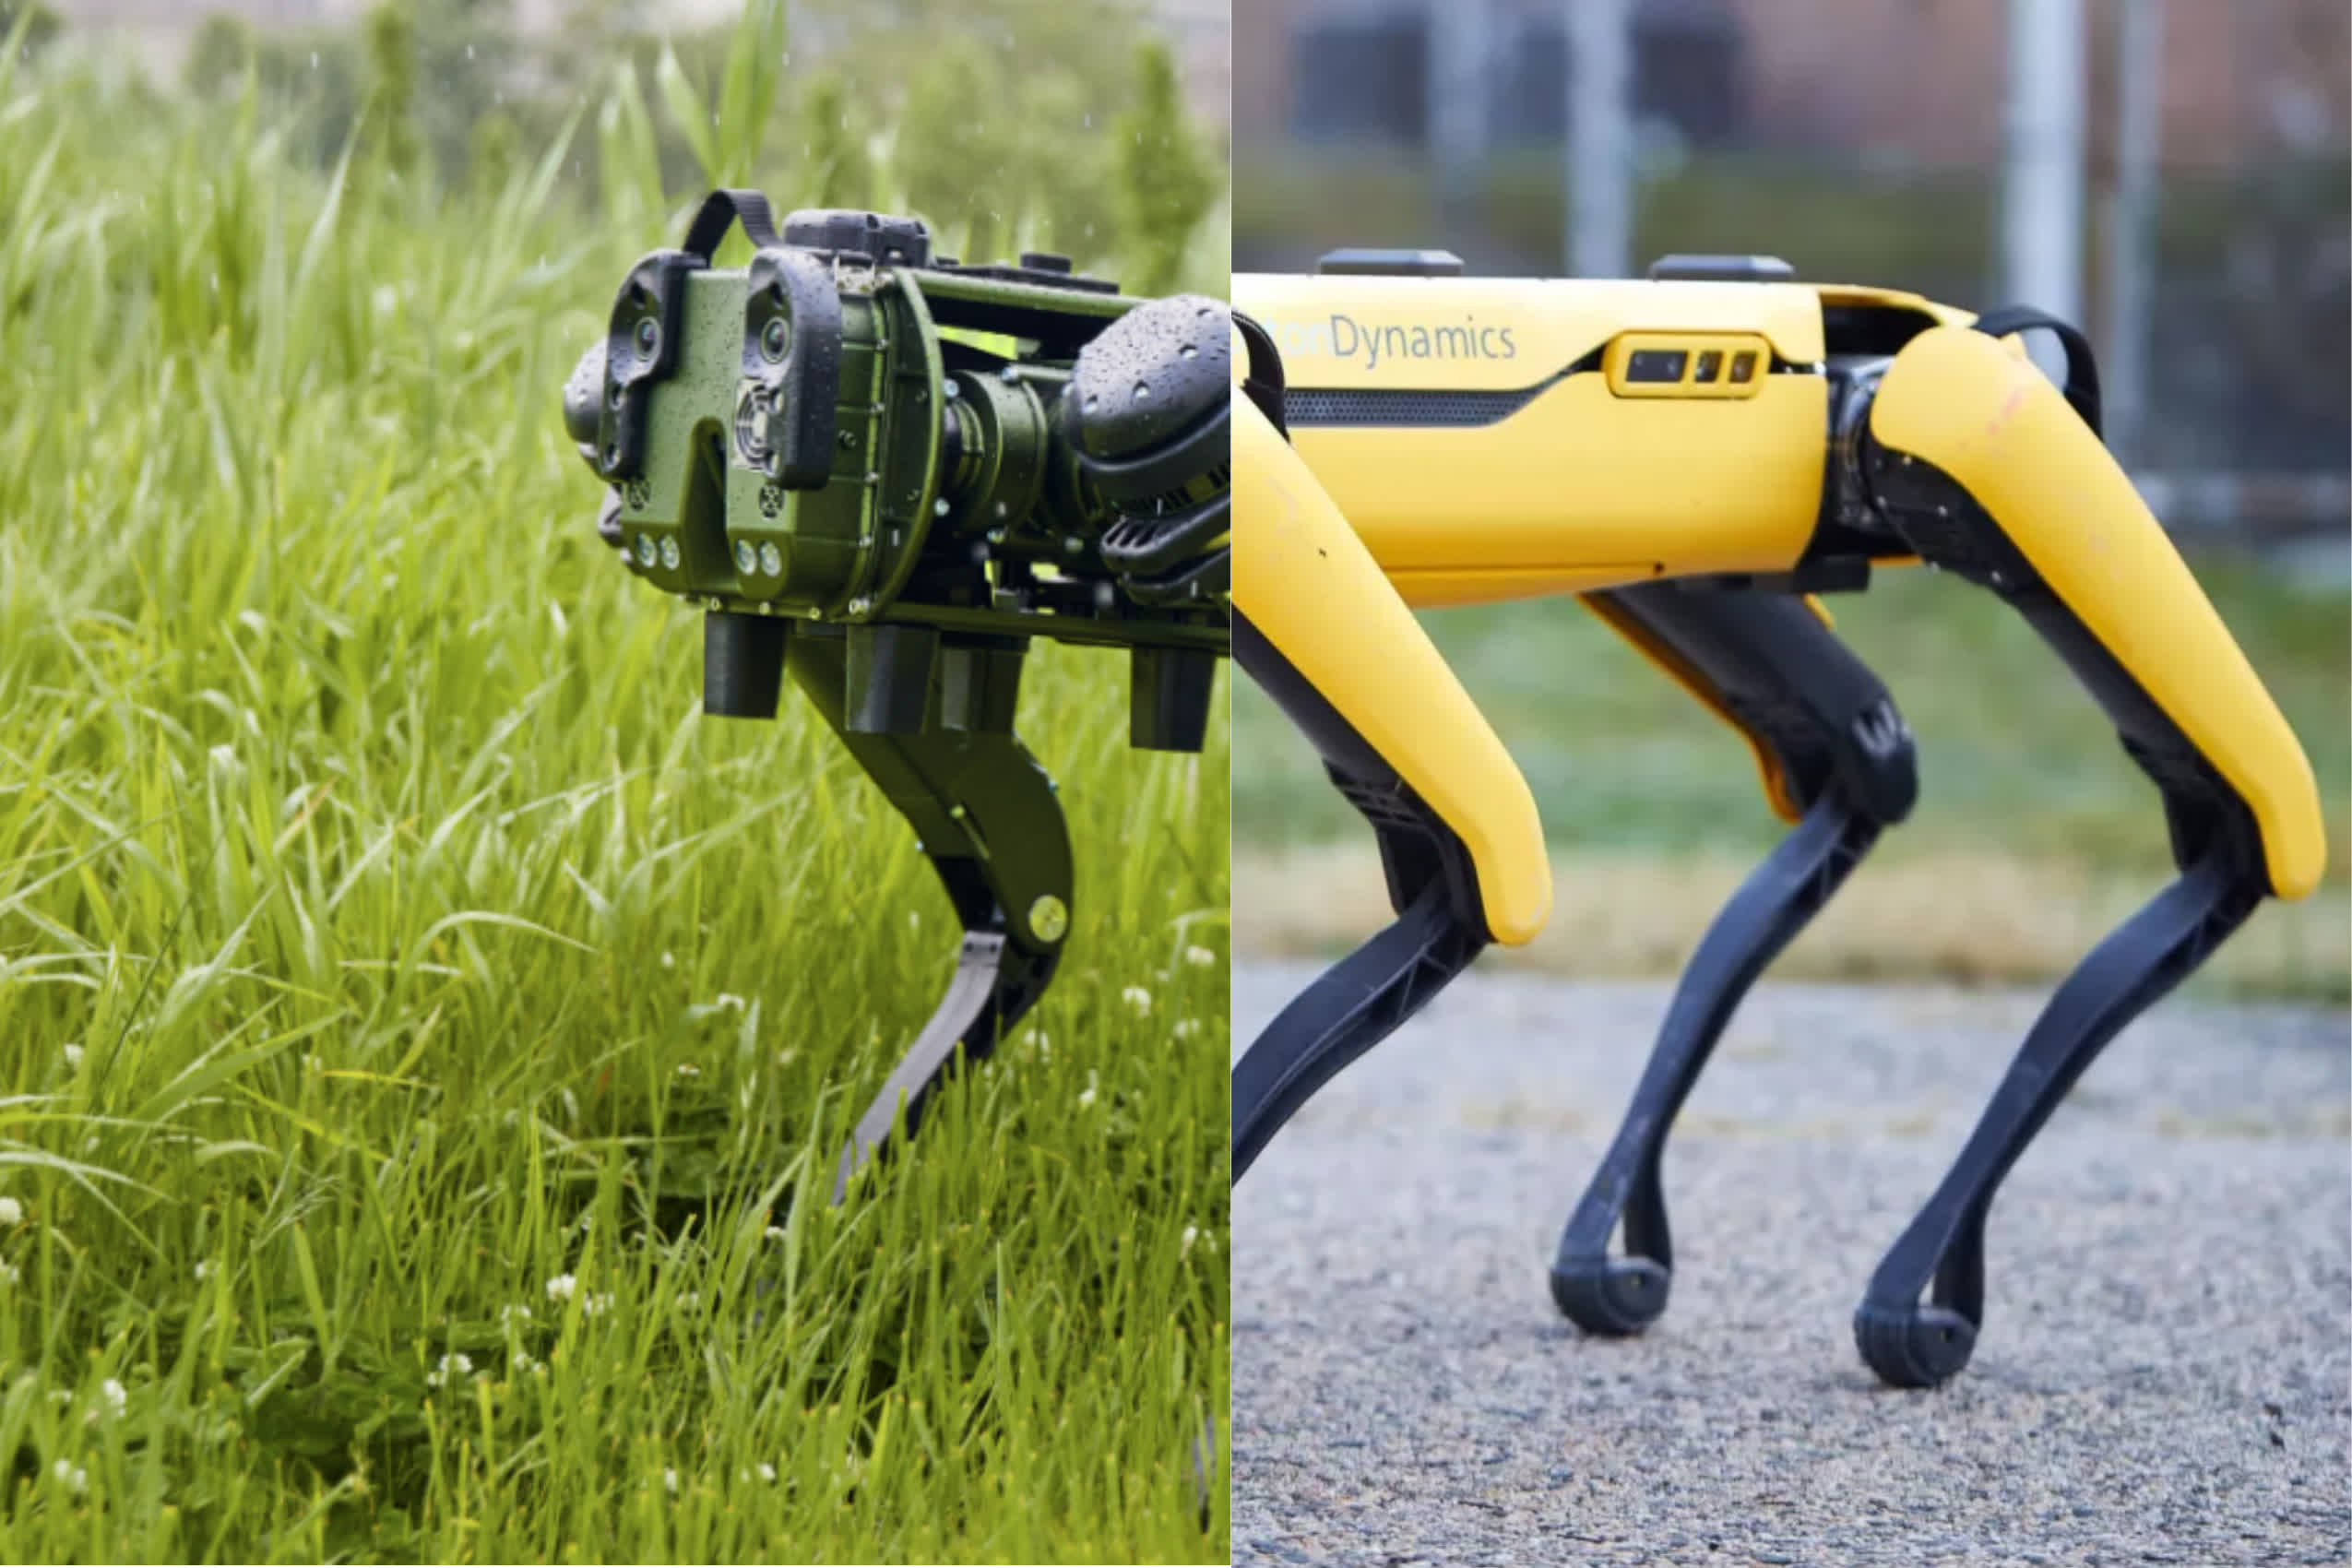 Boston Dynamics sues rival robot dog maker over alleged copyright infringement